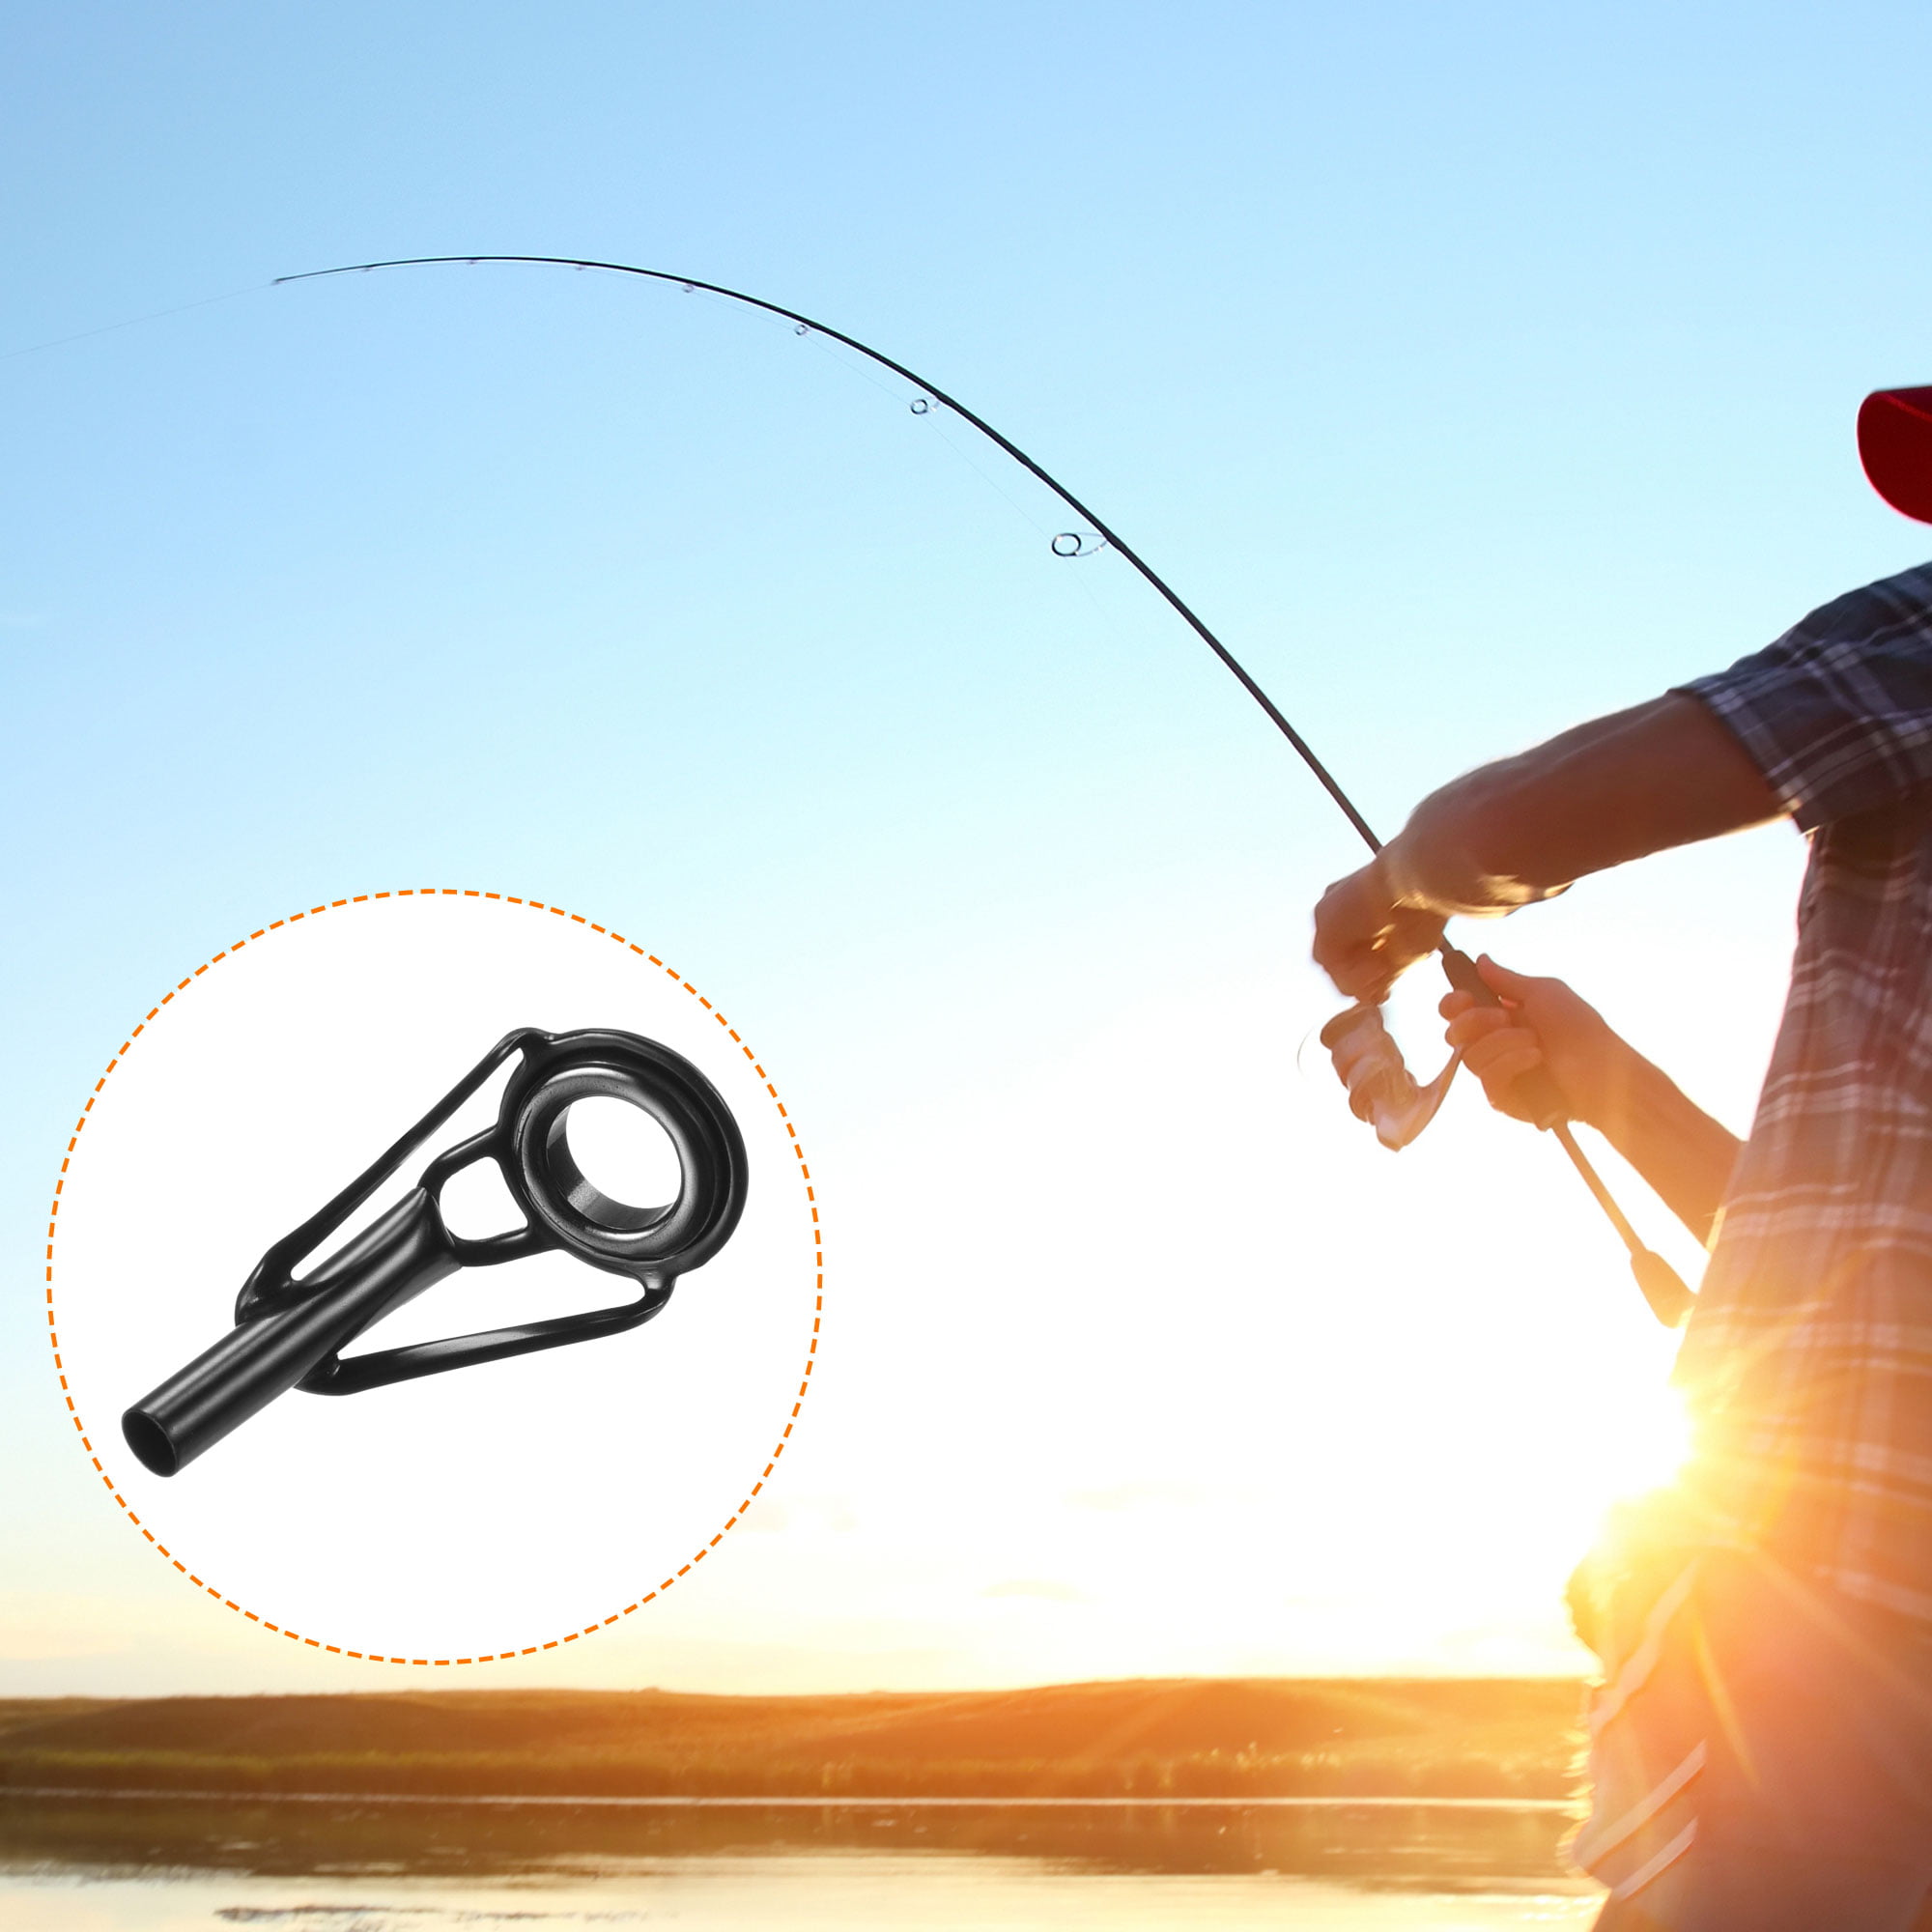 2-6mm Fishing Rod Tip Repair Kit, 30pcs Stainless Steel Ring Guide